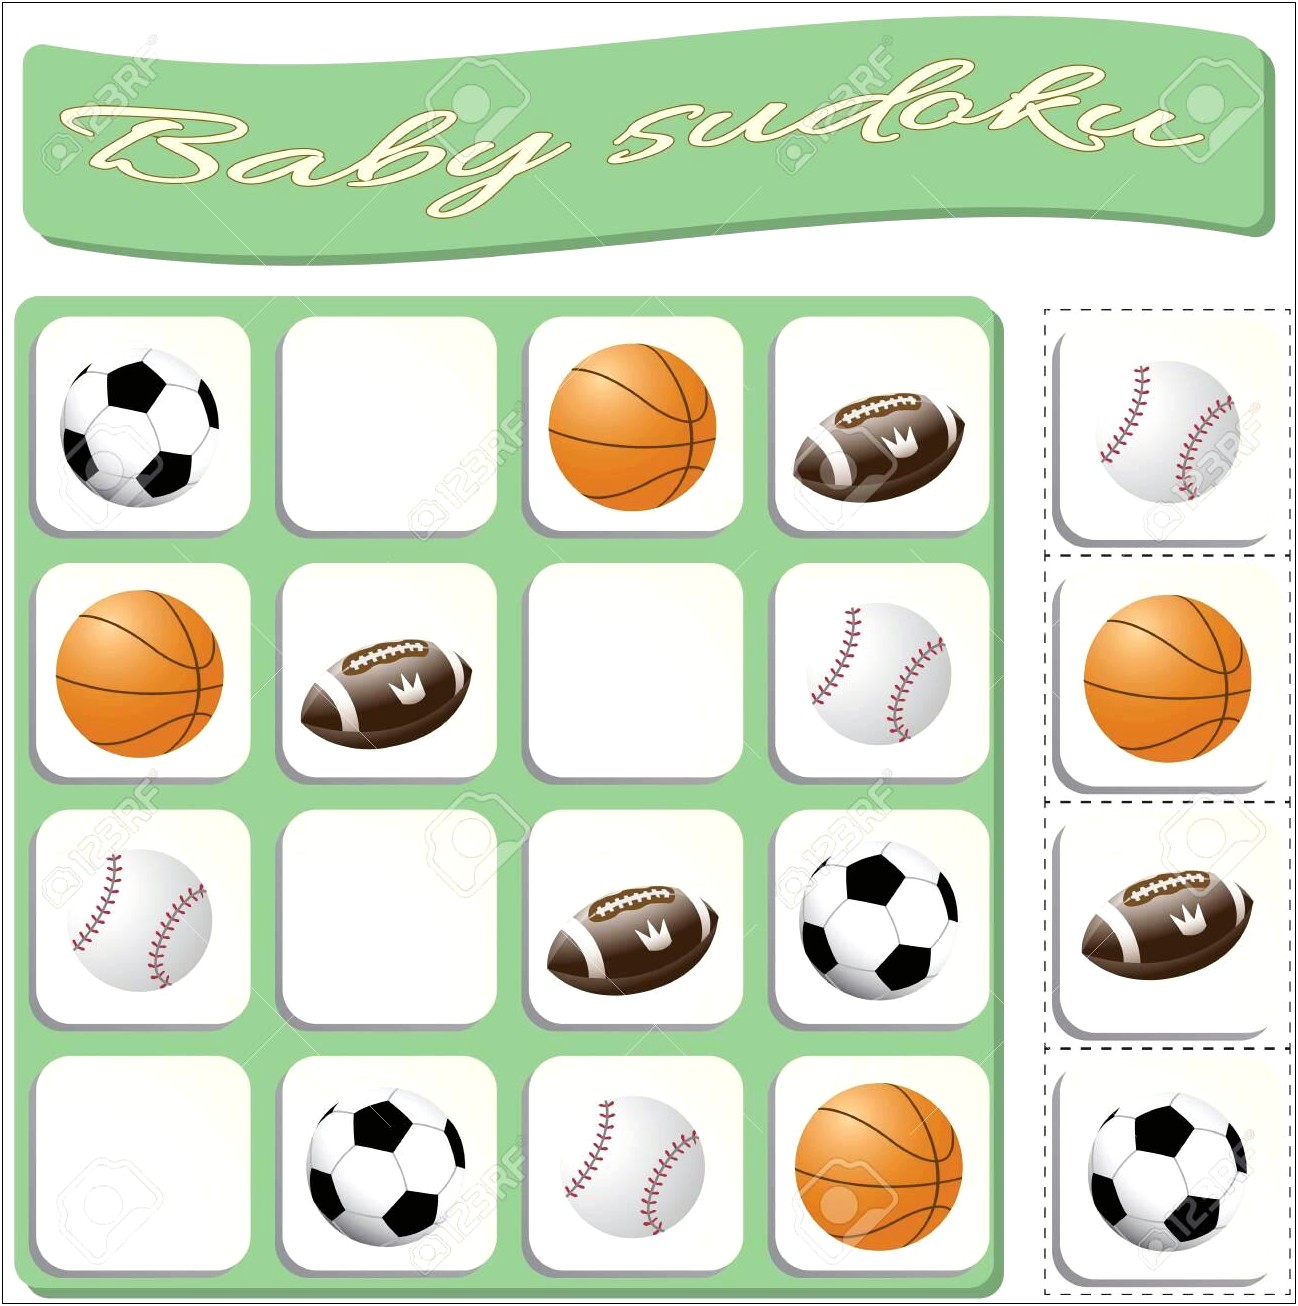 Free Printable Sports Ball Templates For Prek